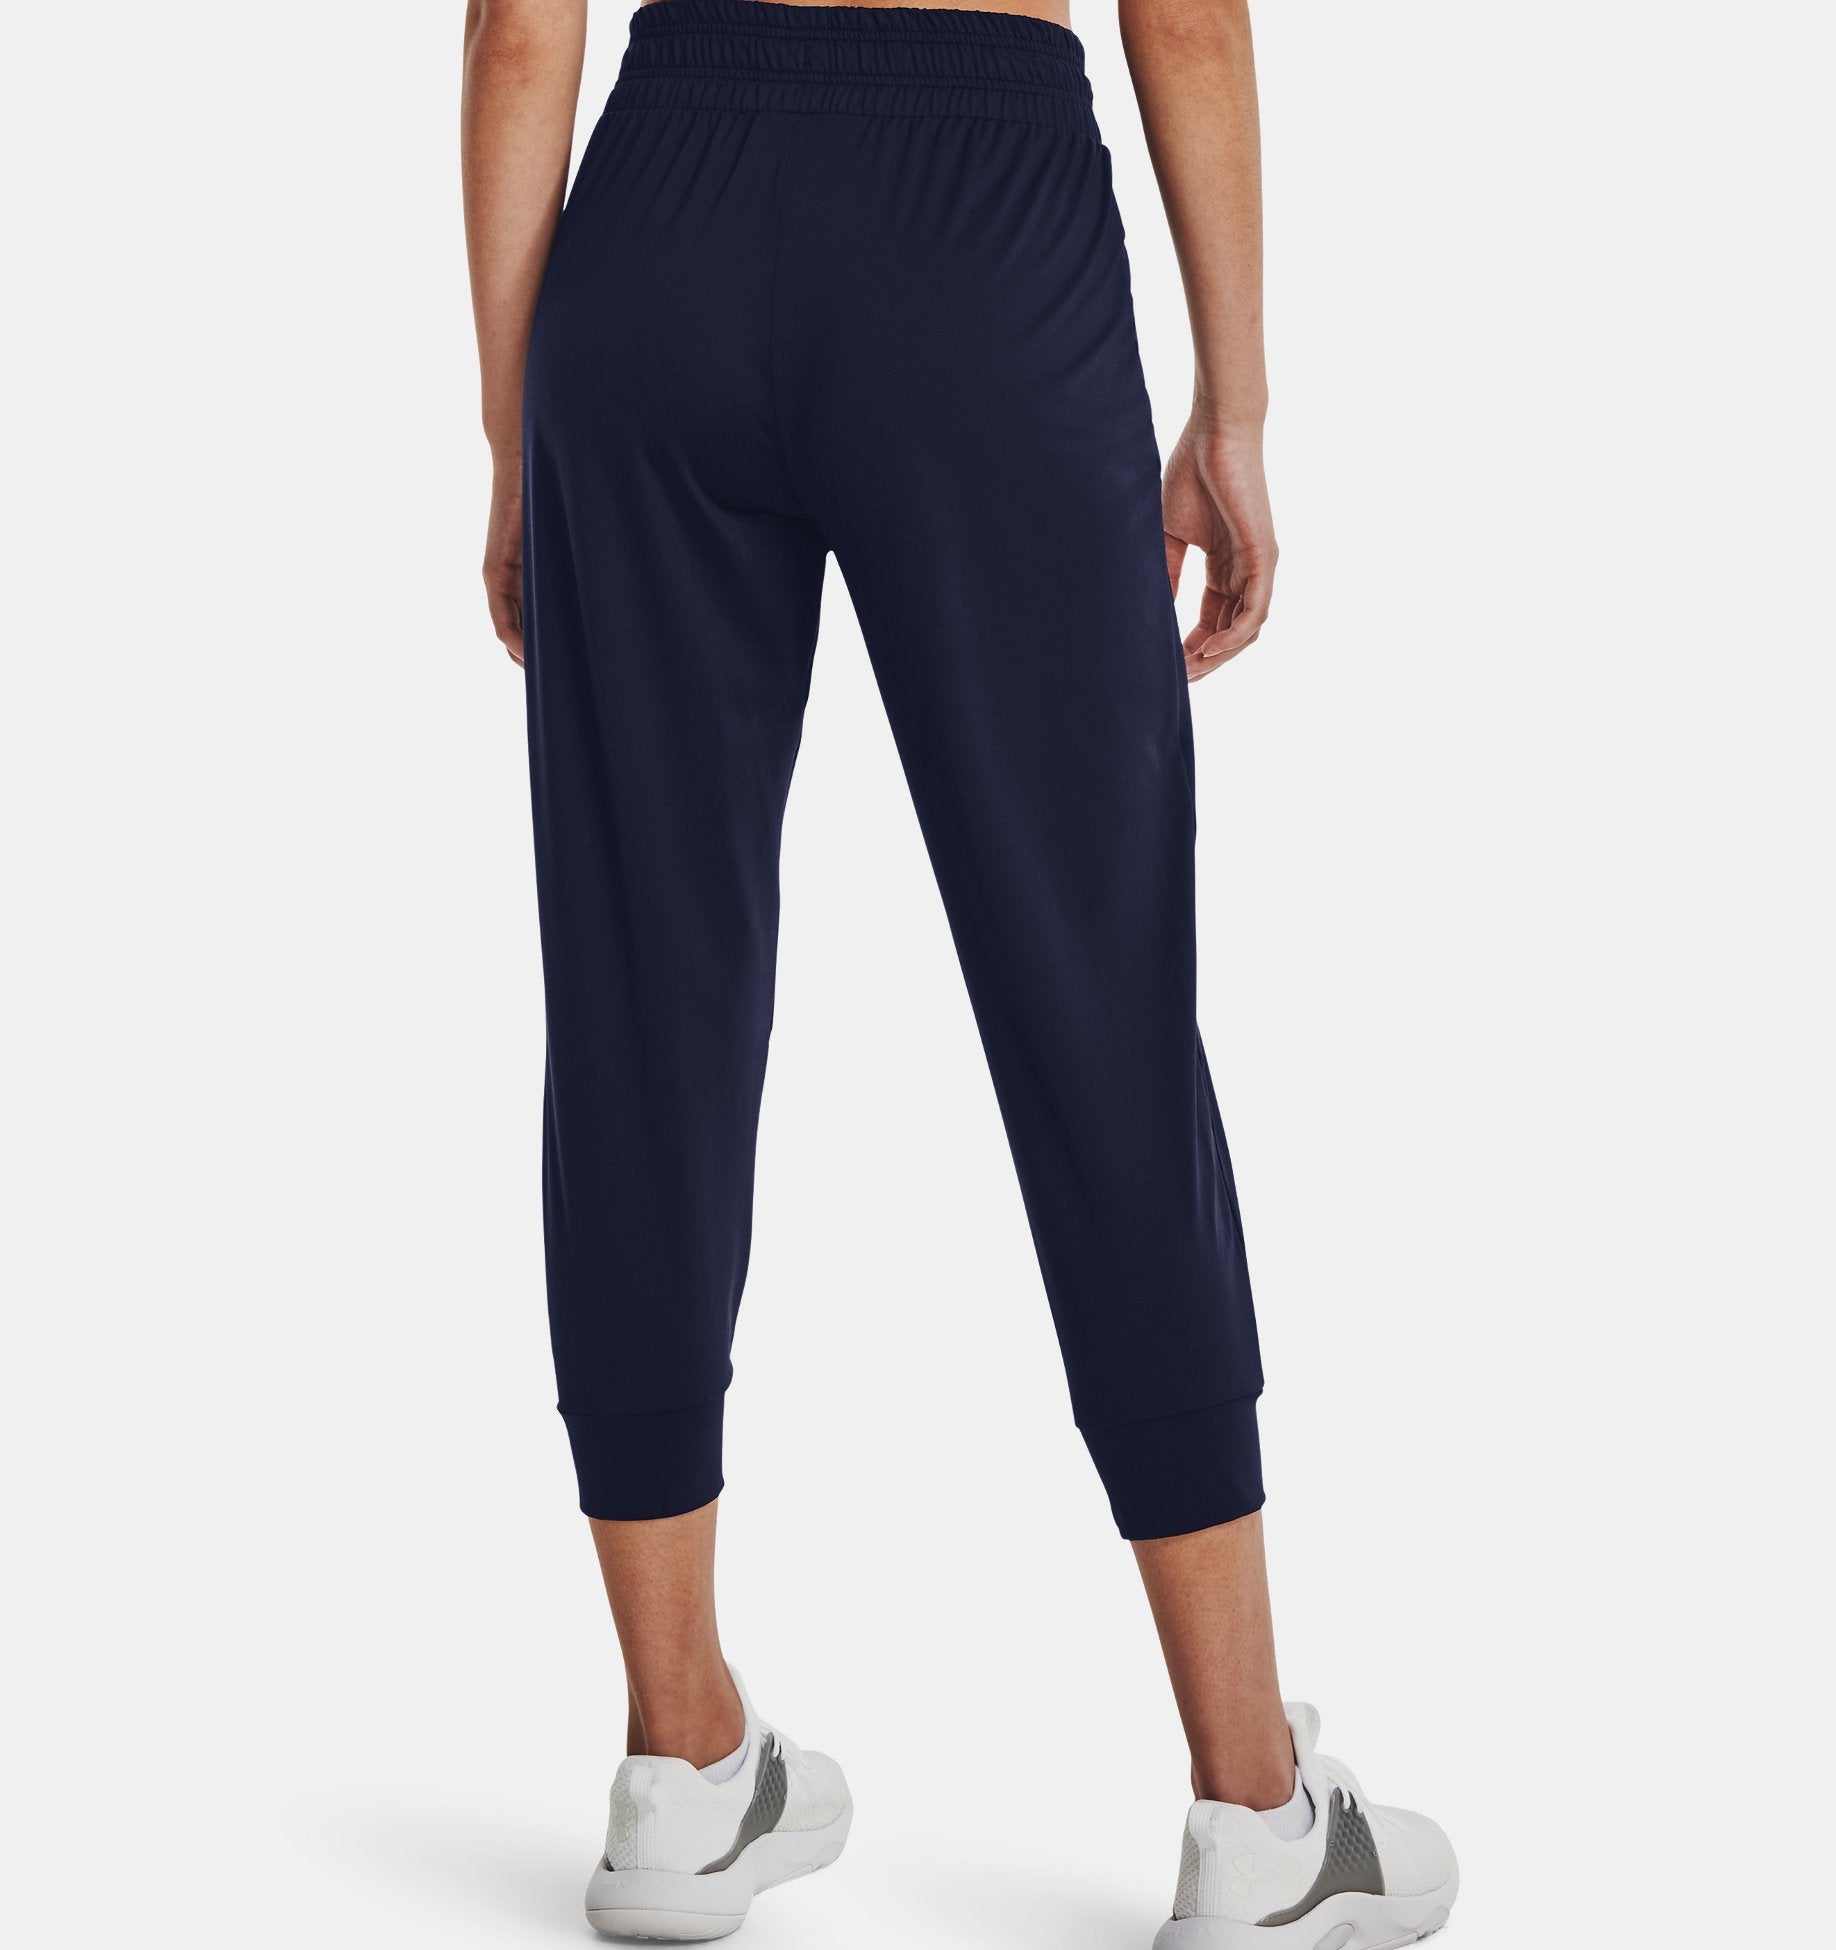 Women's HeatGear® Capri Pants - 1372632